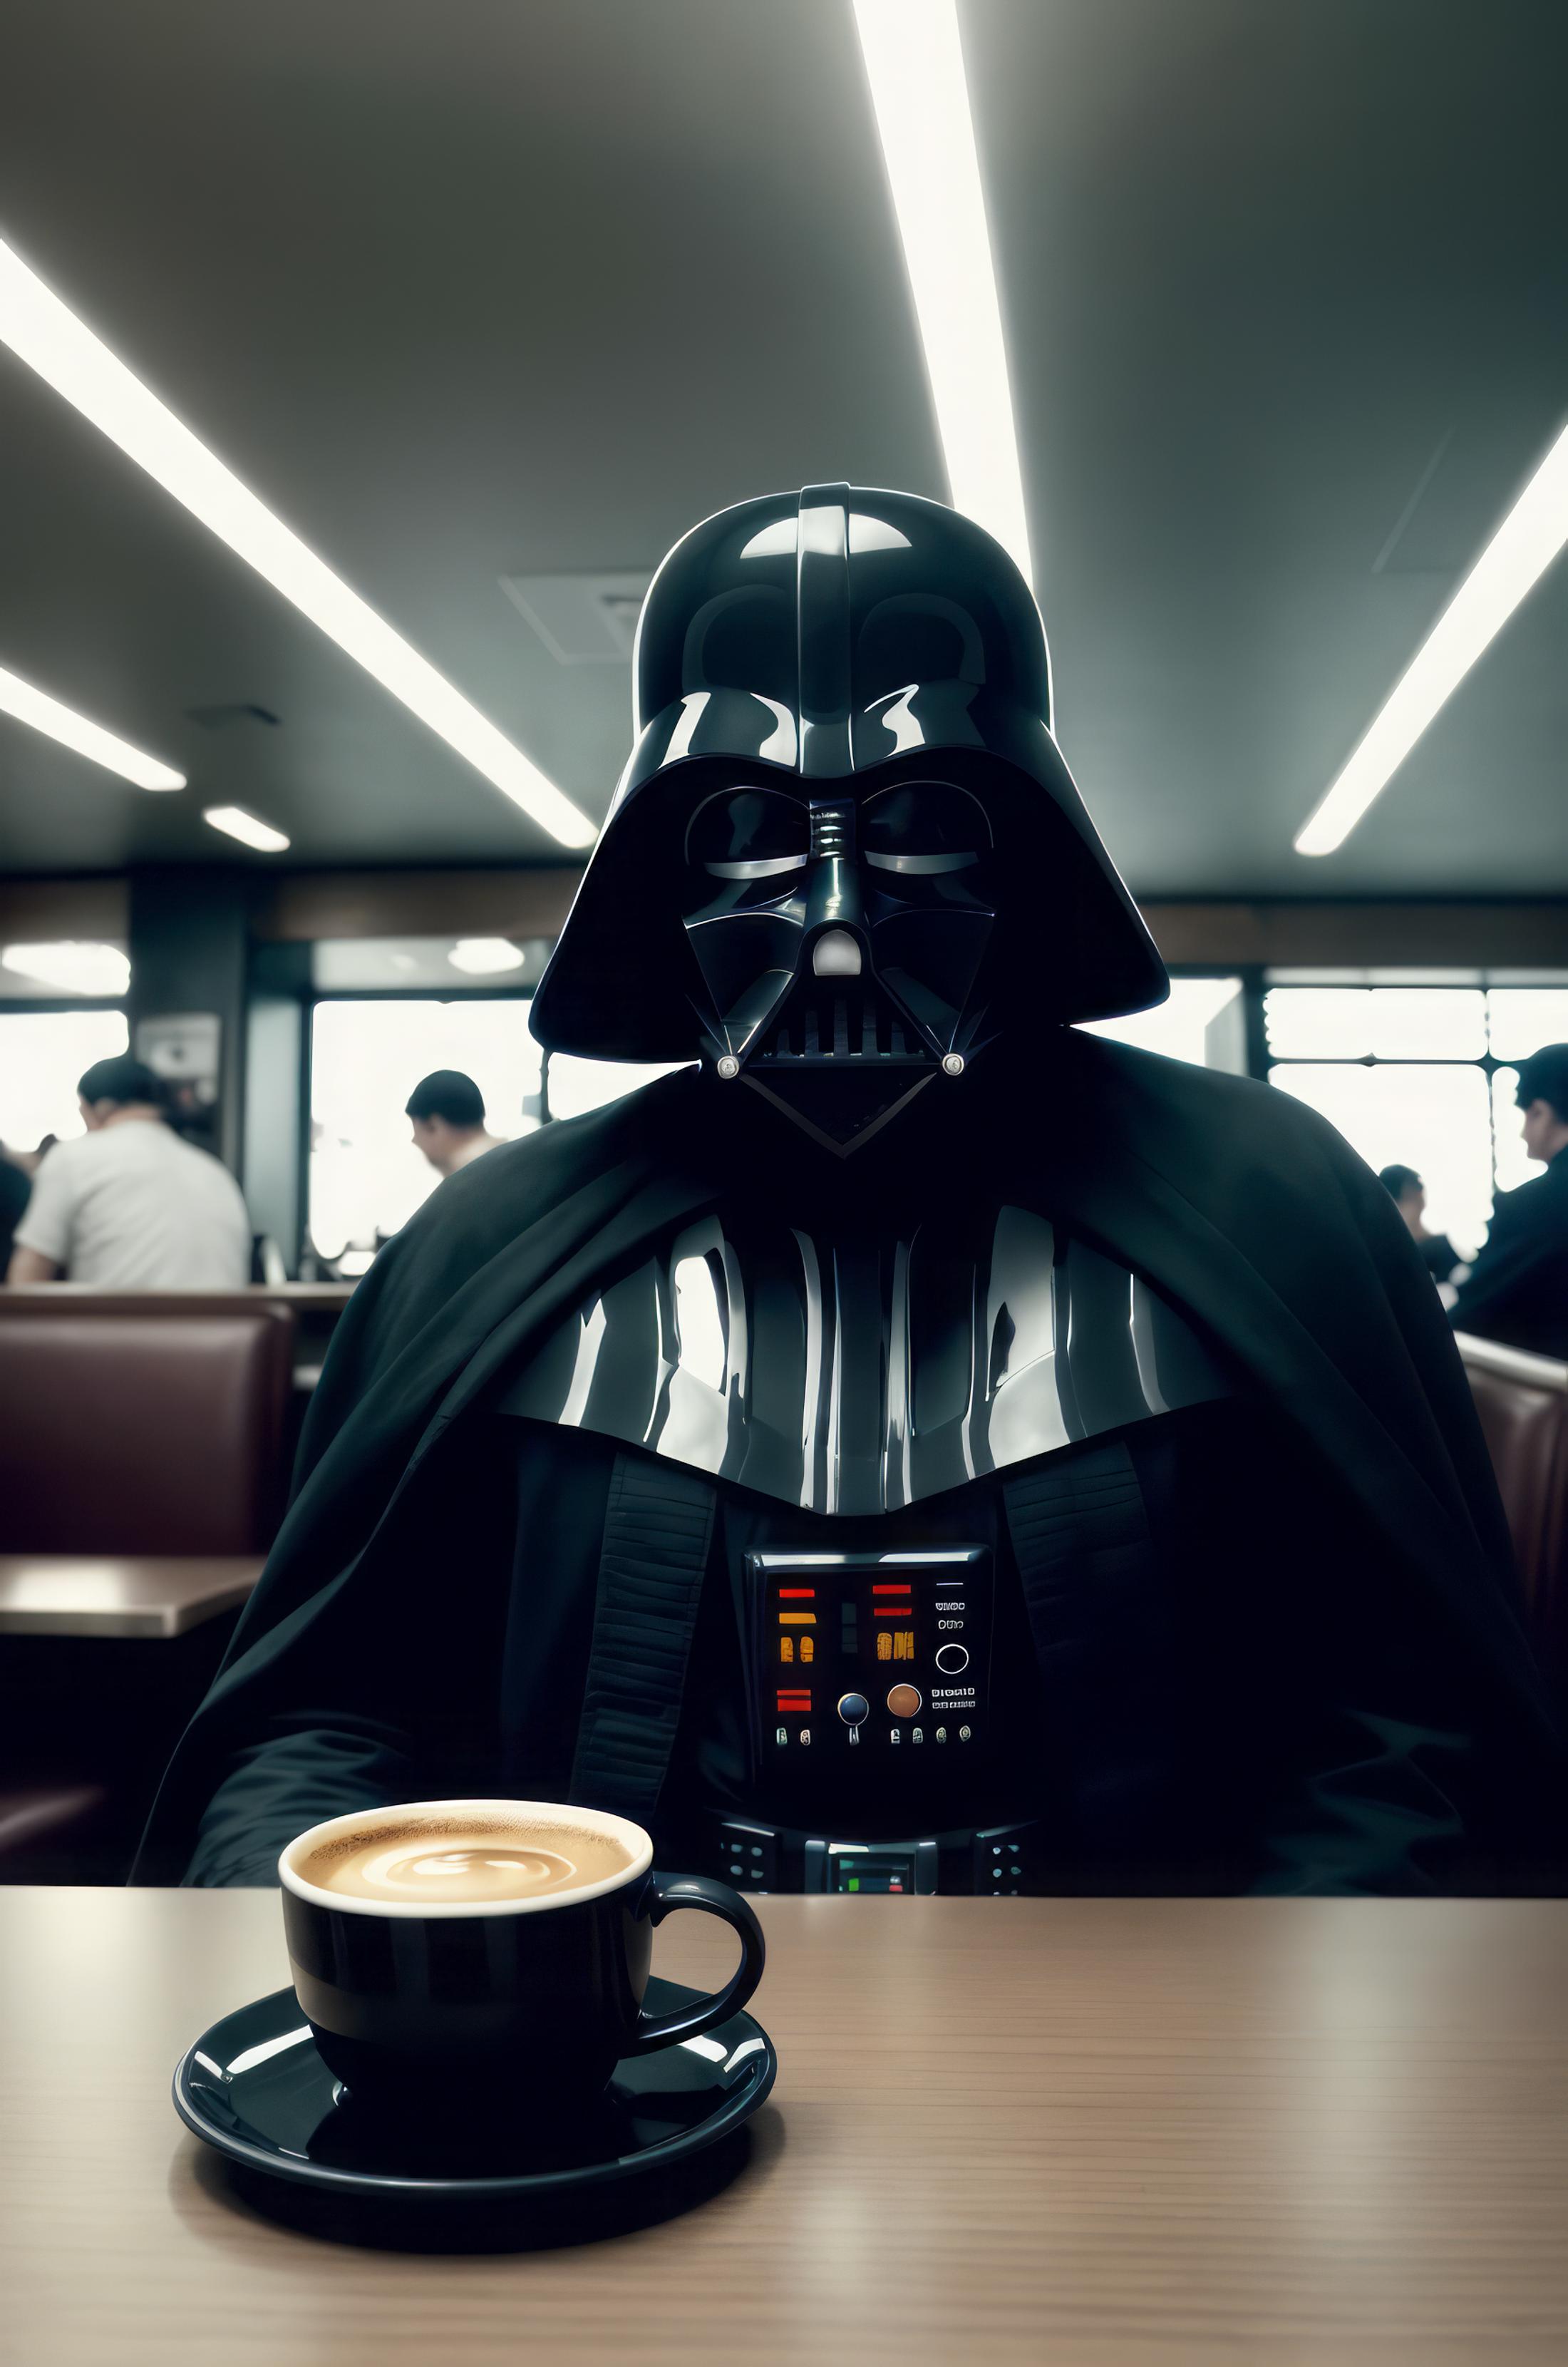 Darth Vader Droid Repair Manual: A Star Wars Themed Coffee Shop